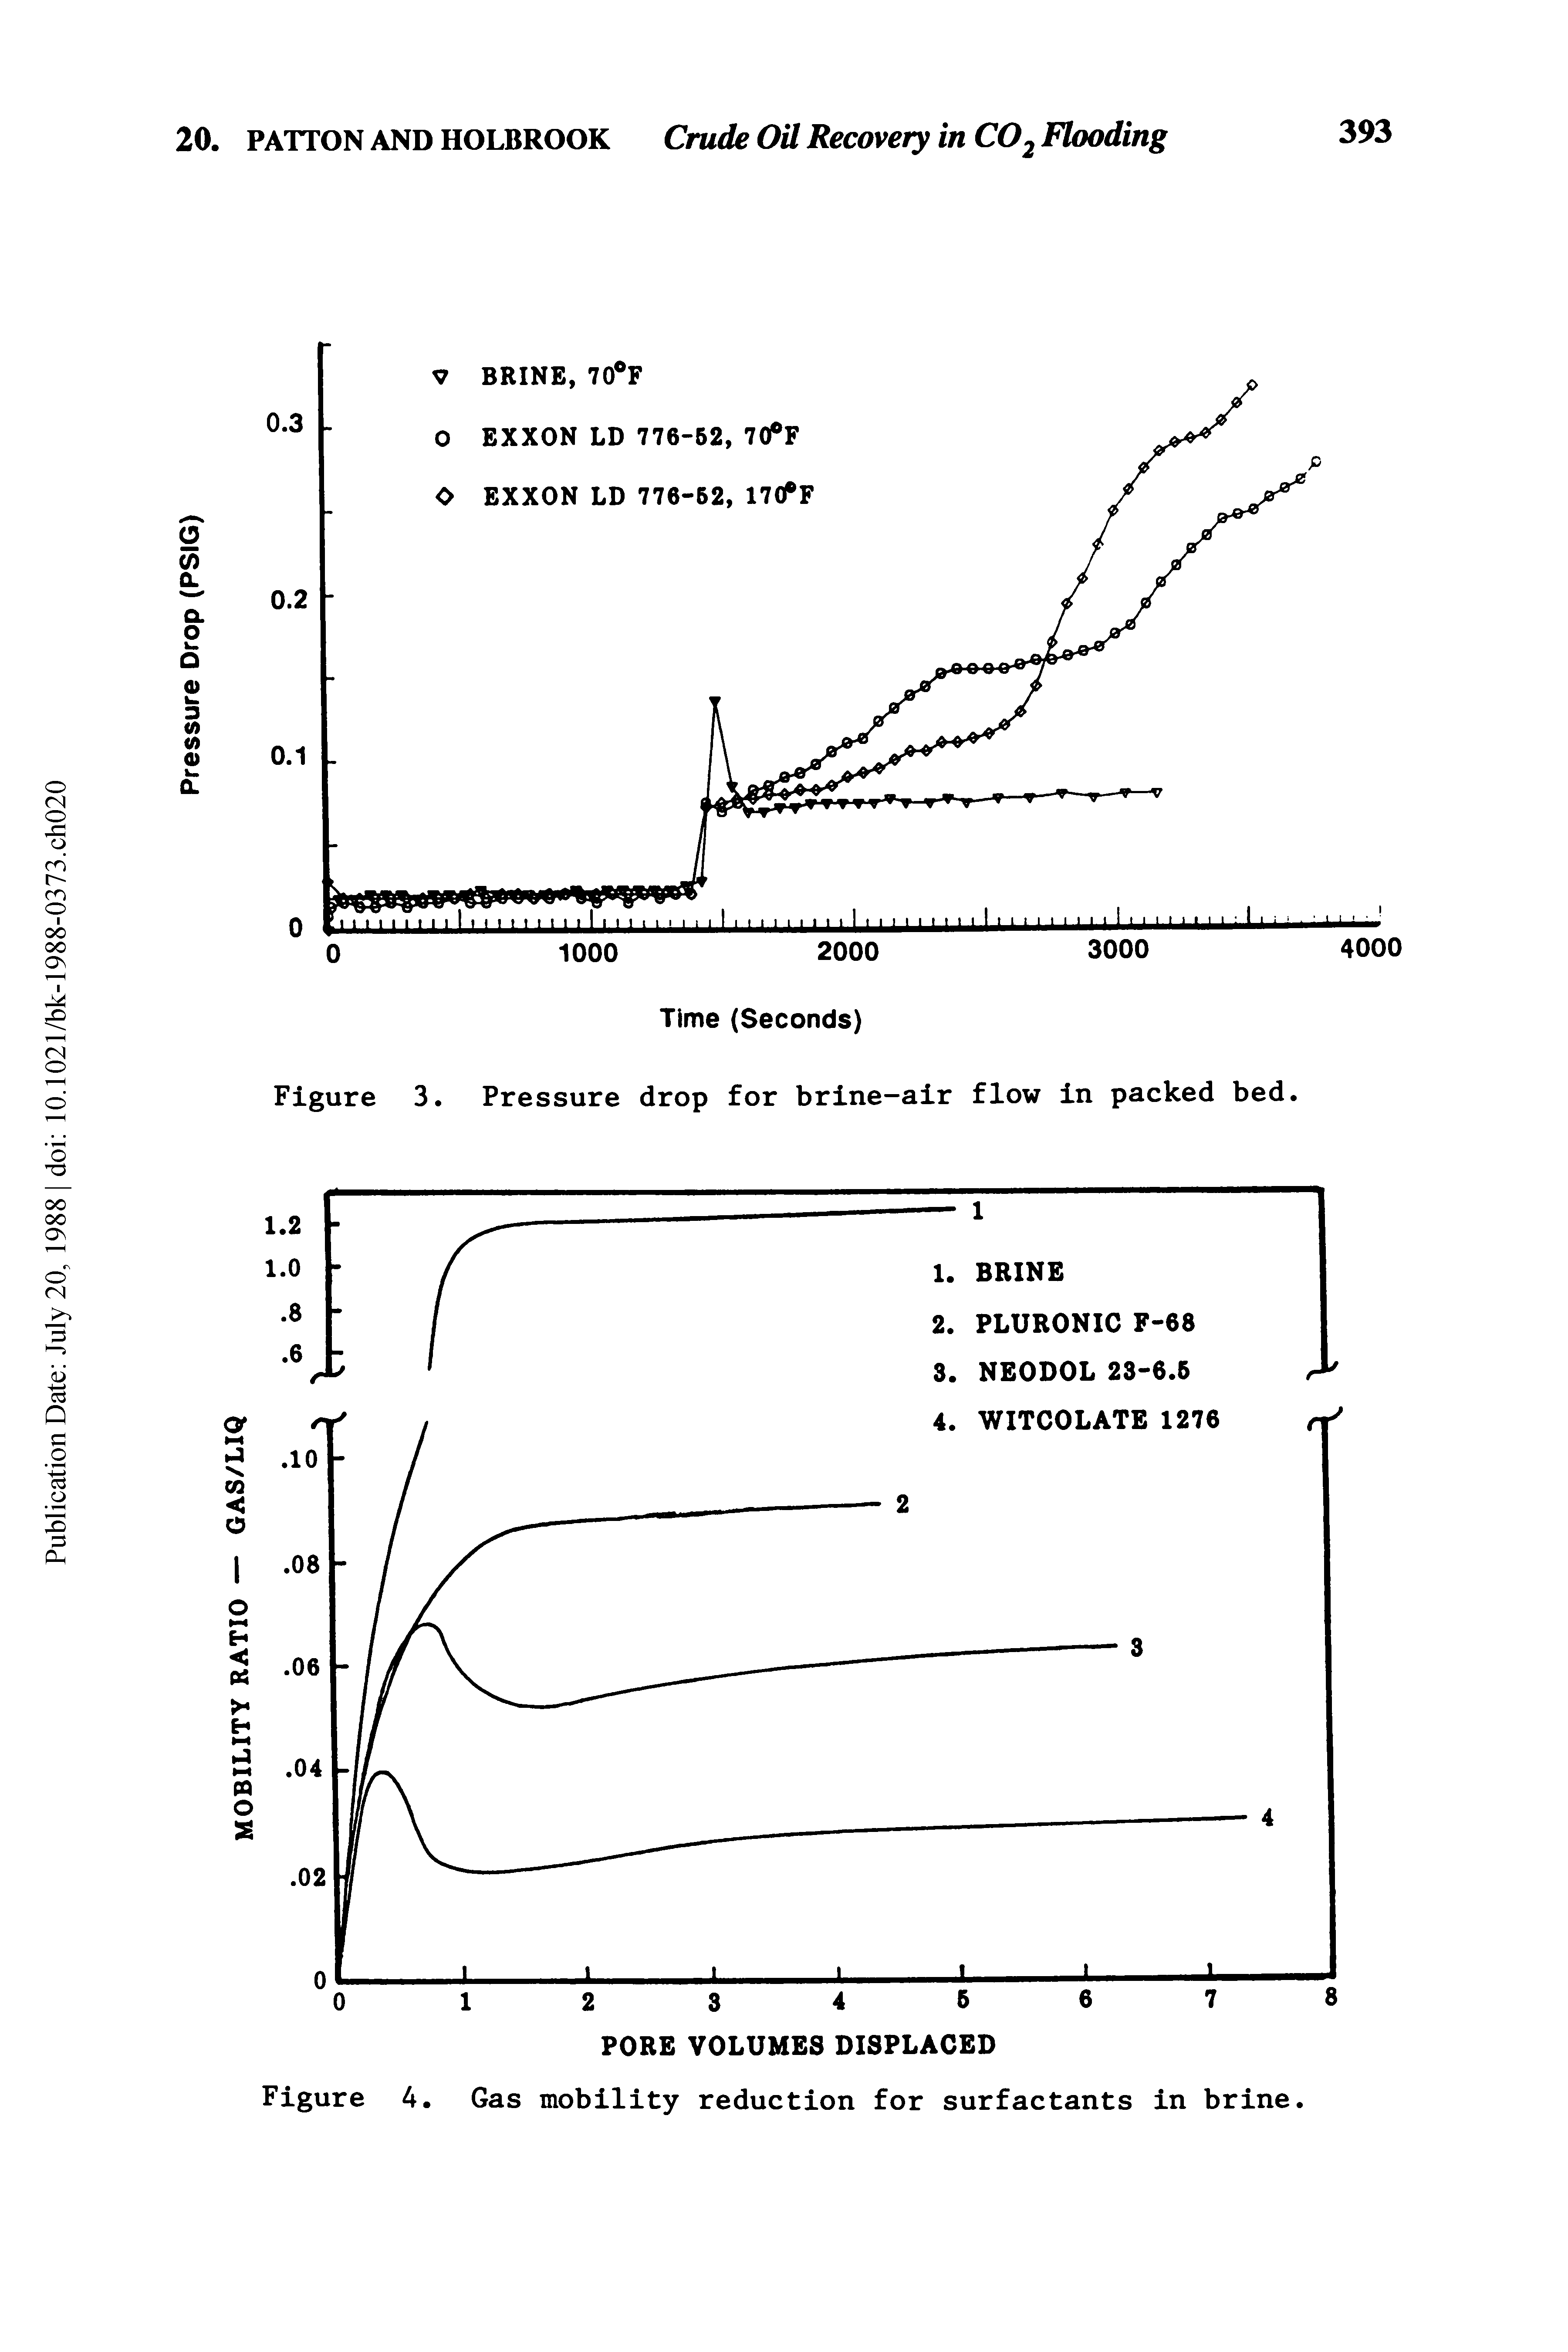 Figure 3. Pressure drop for brine-air flow in packed bed.